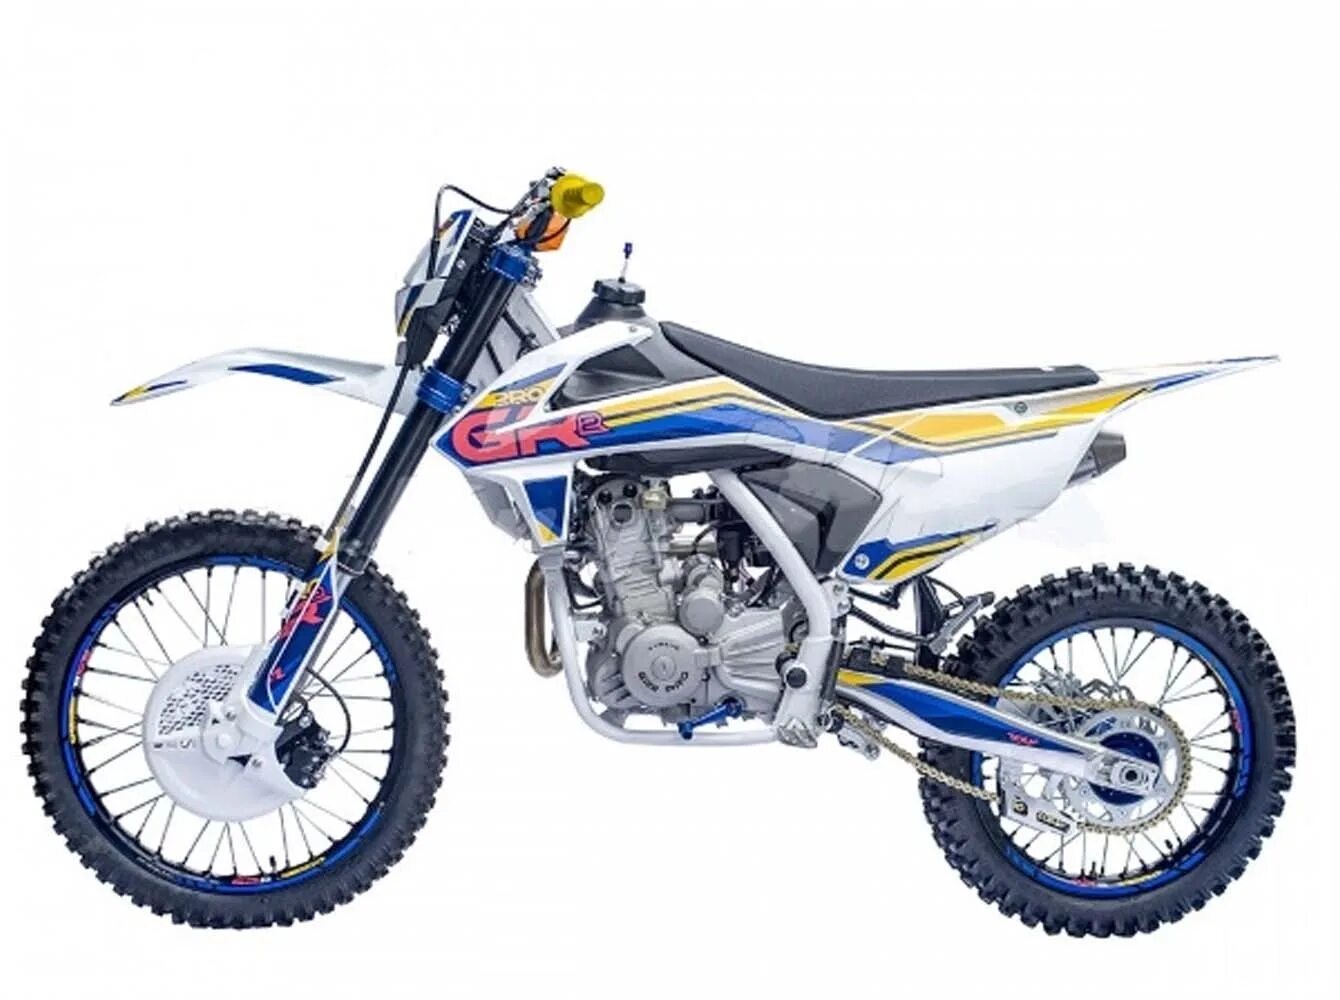 Мотоцикл promax stryker 200. Мотоцикл gr2 300 Pro (вод. Охл. Zs174mn) 21/18 (2020 г.). Gr2 Pro мотоцикл. Gr2 300 Pro. Gr 2 300 про мотоцикл.